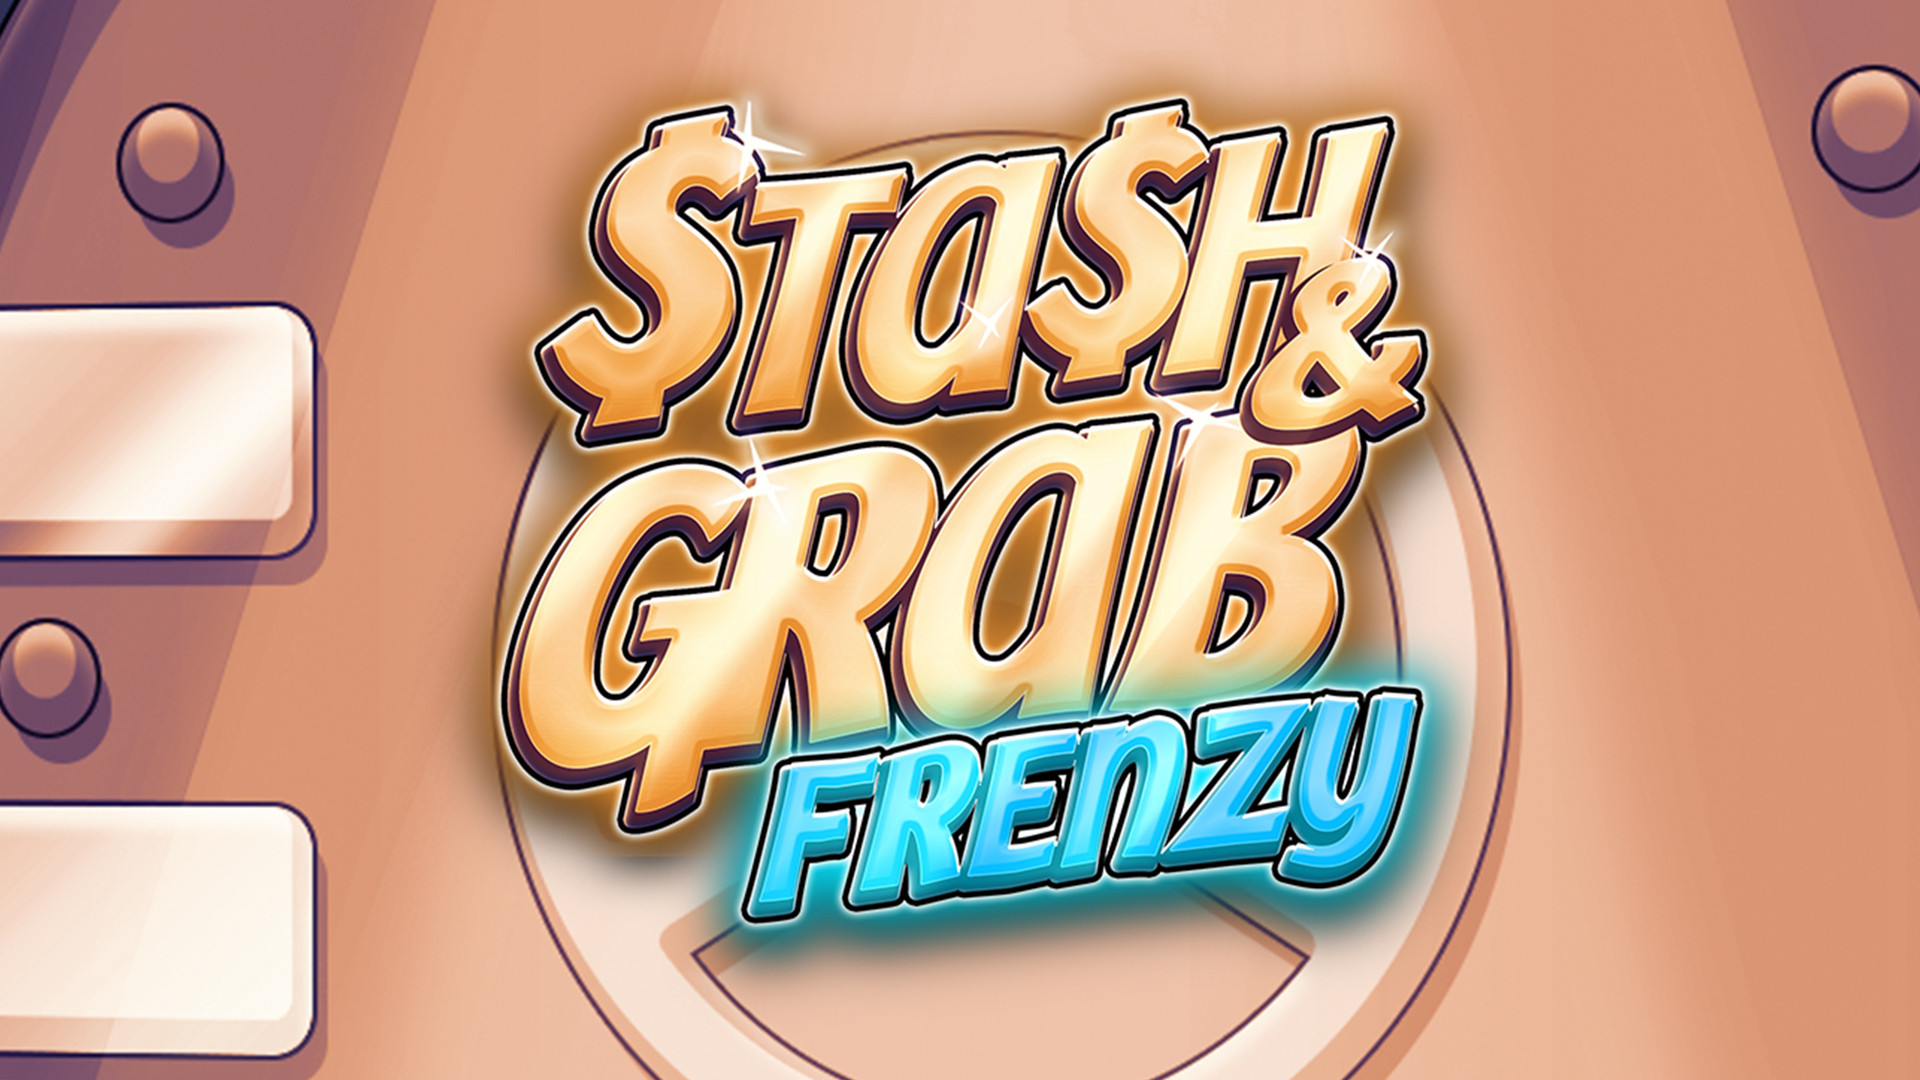 Stash & Grab Frenzy